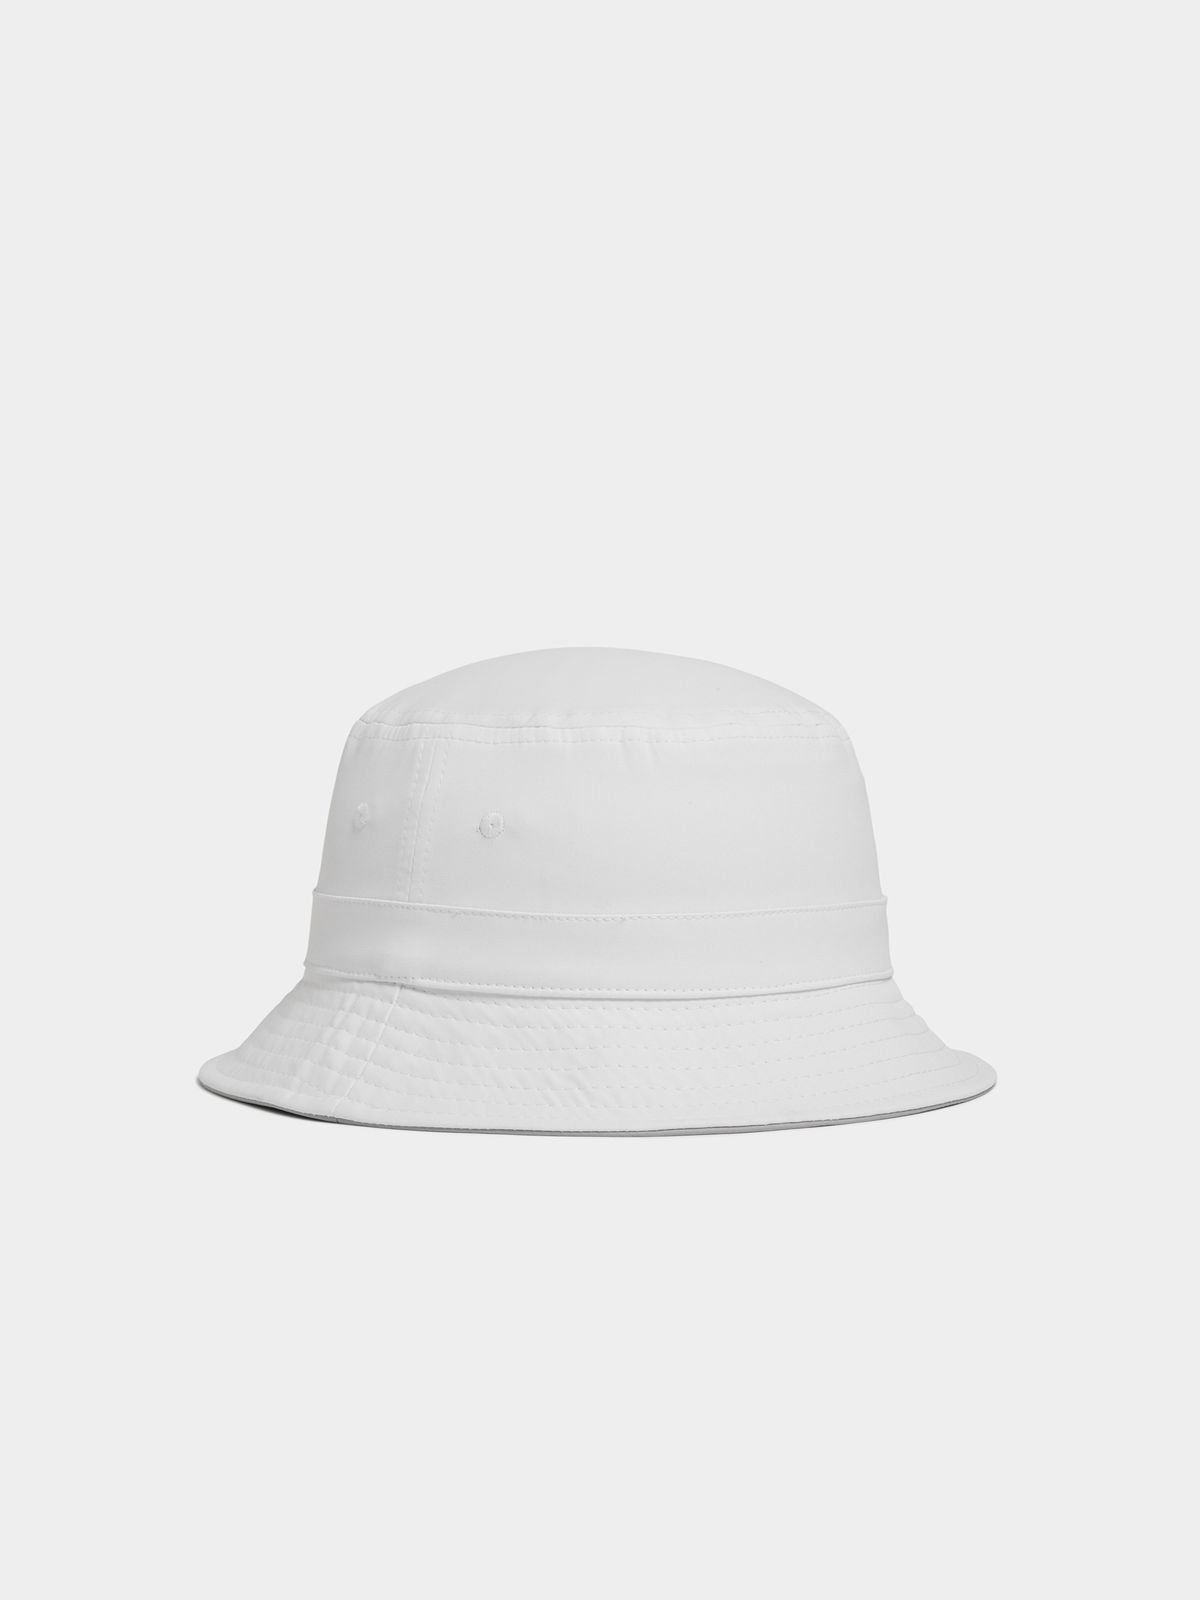 Sneaker Factory Unisex White/Grey Bucket Hat - Bash.com